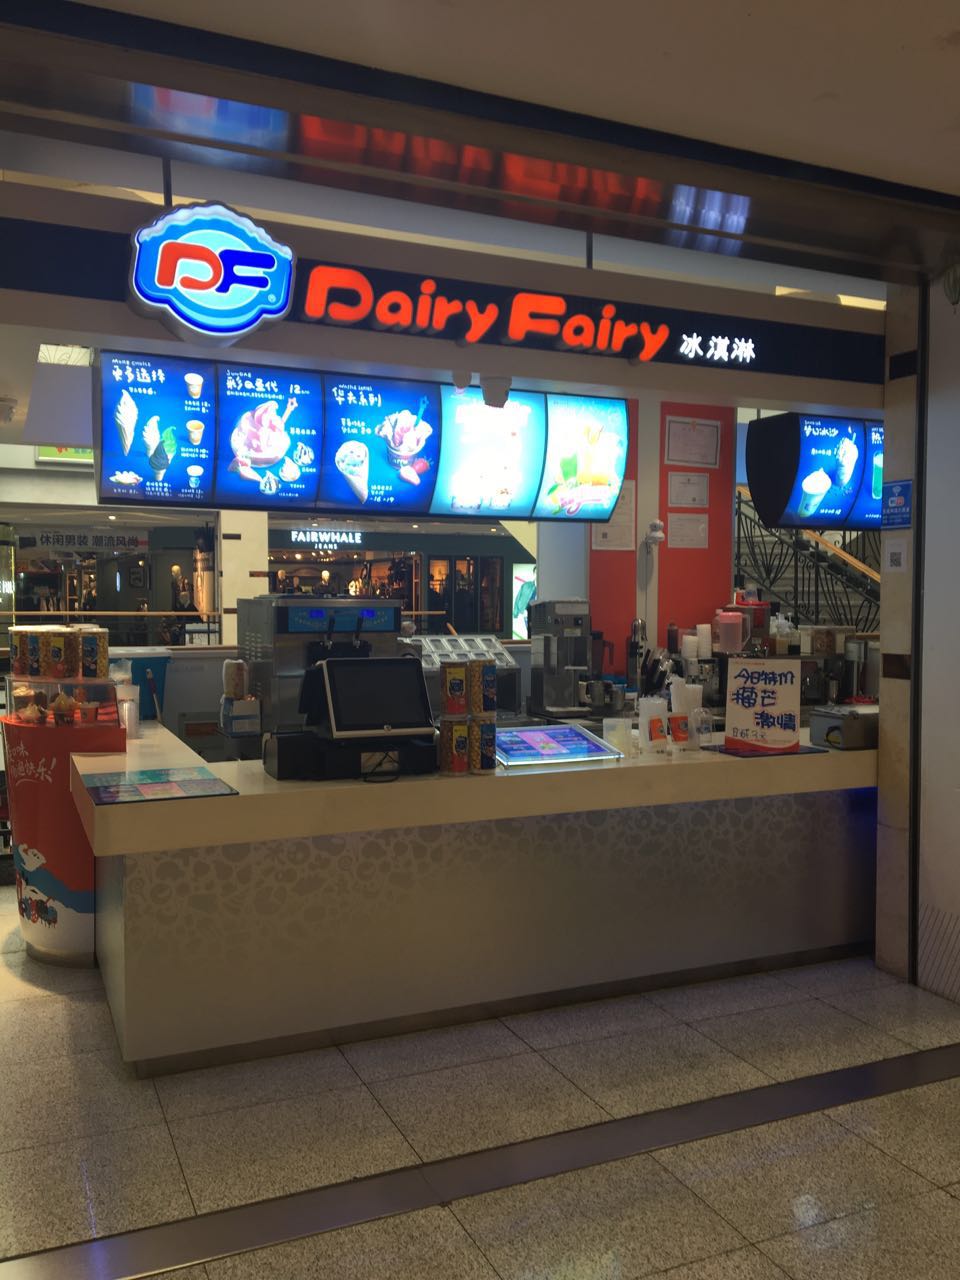 df冰激凌 df冰淇淋(dairy fairy)是迪孚控股旗下迪孚时代(北京)国际